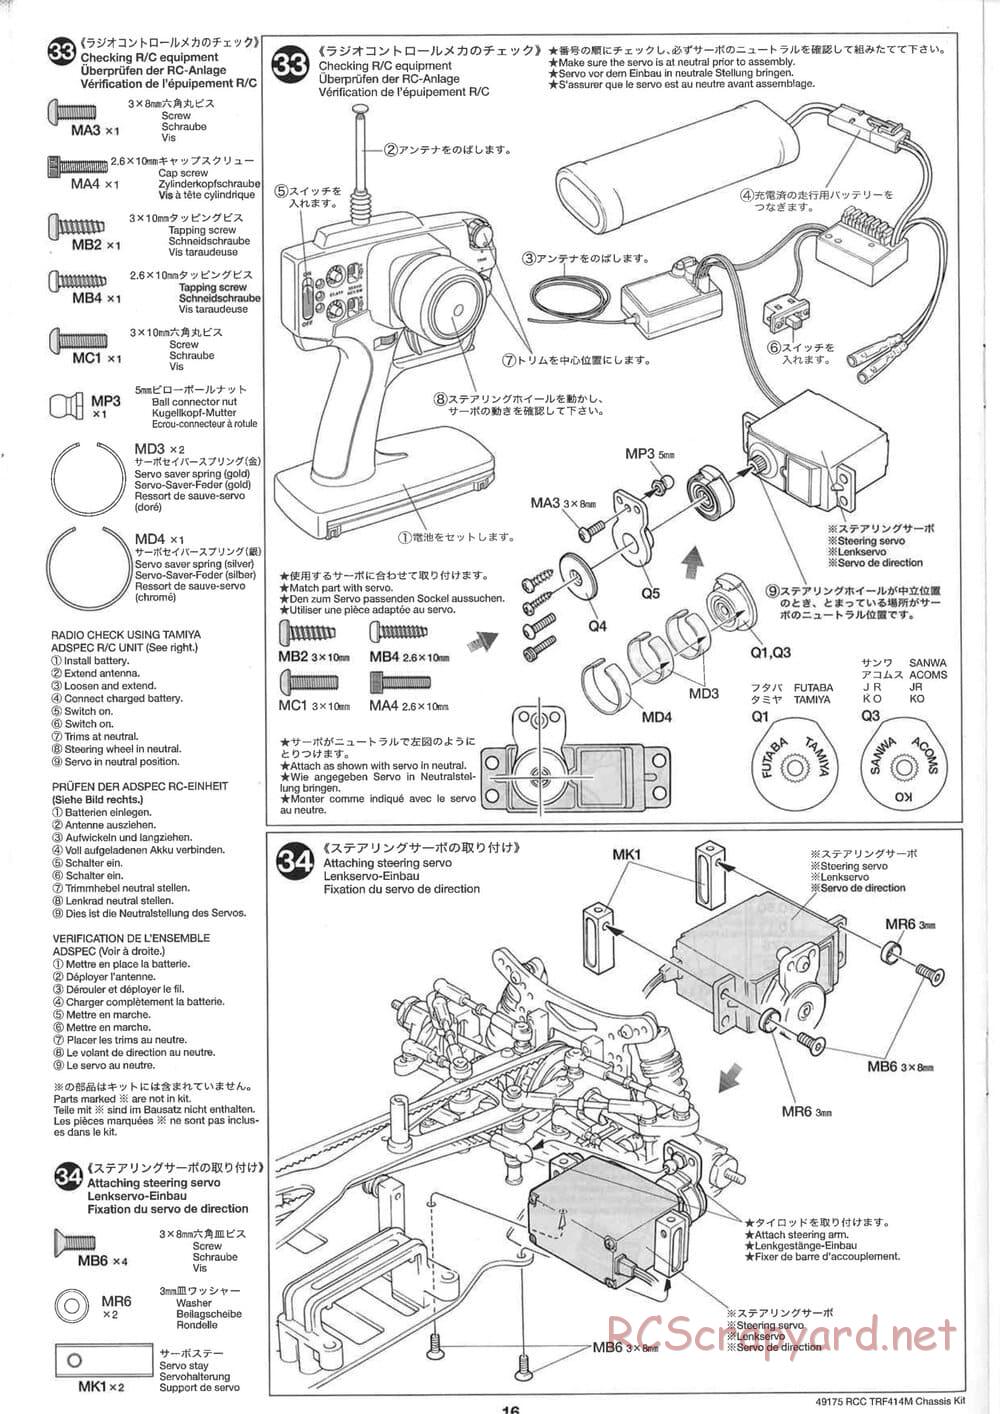 Tamiya - TRF414M Chassis - Manual - Page 16